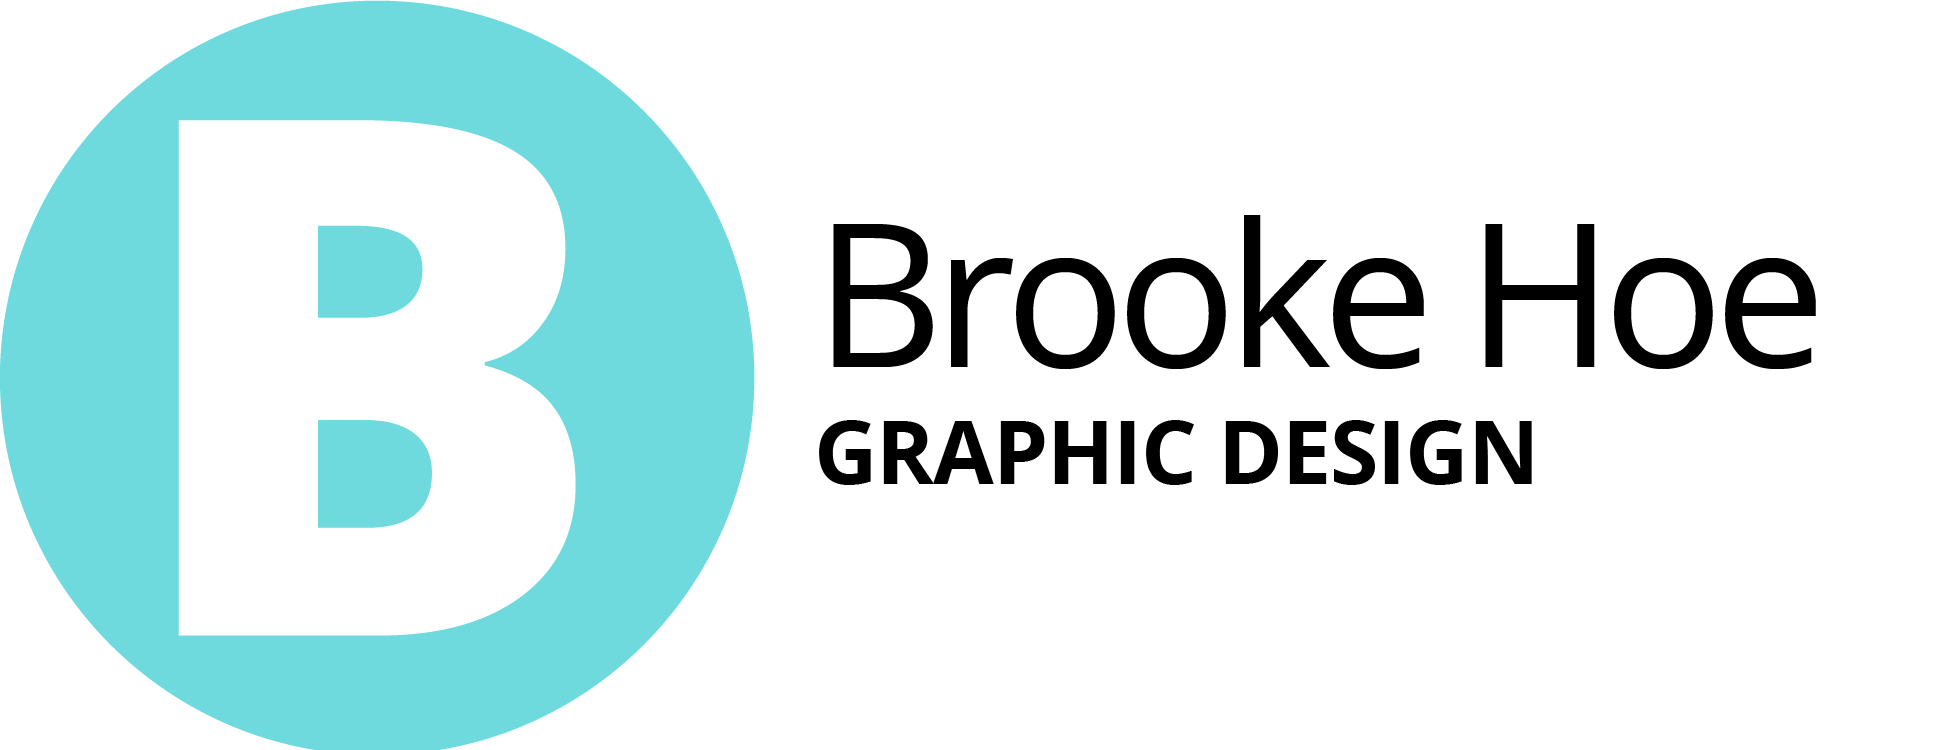 Brooke Hoe | Graphic Design